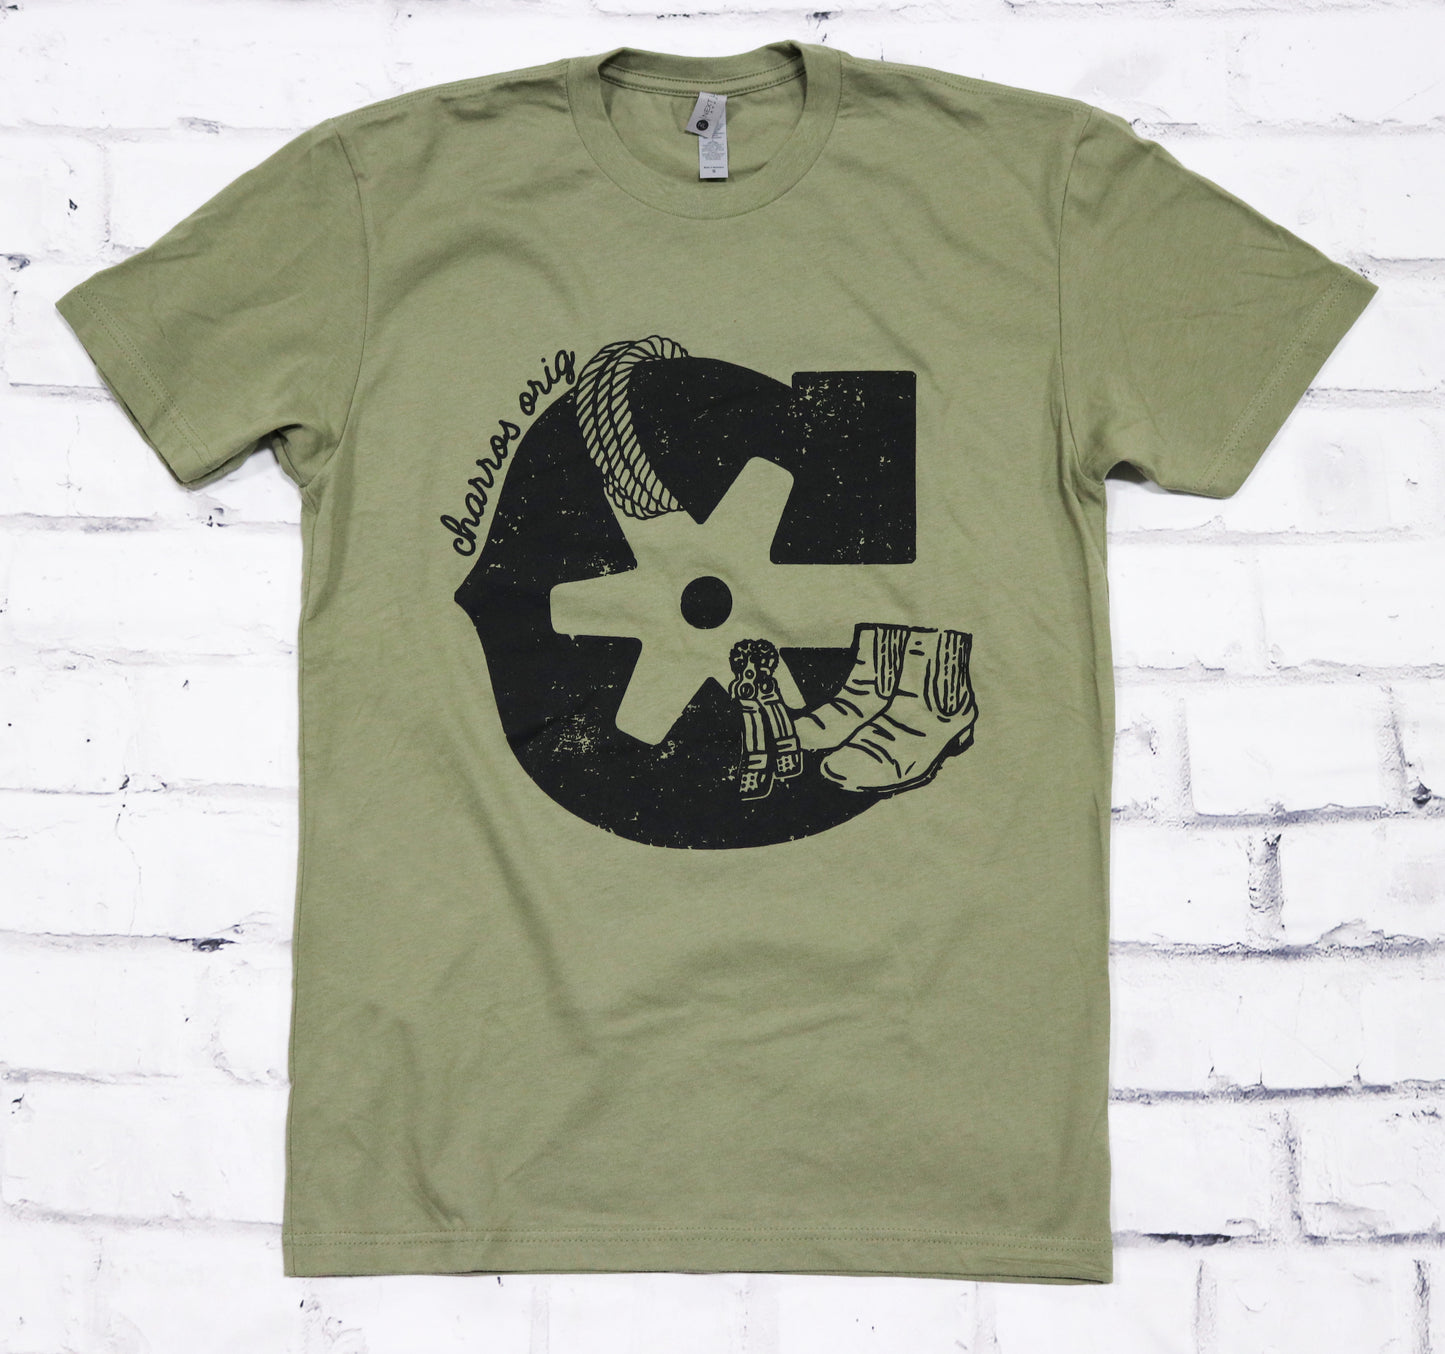 Olive Green "C" Tack T-Shirt